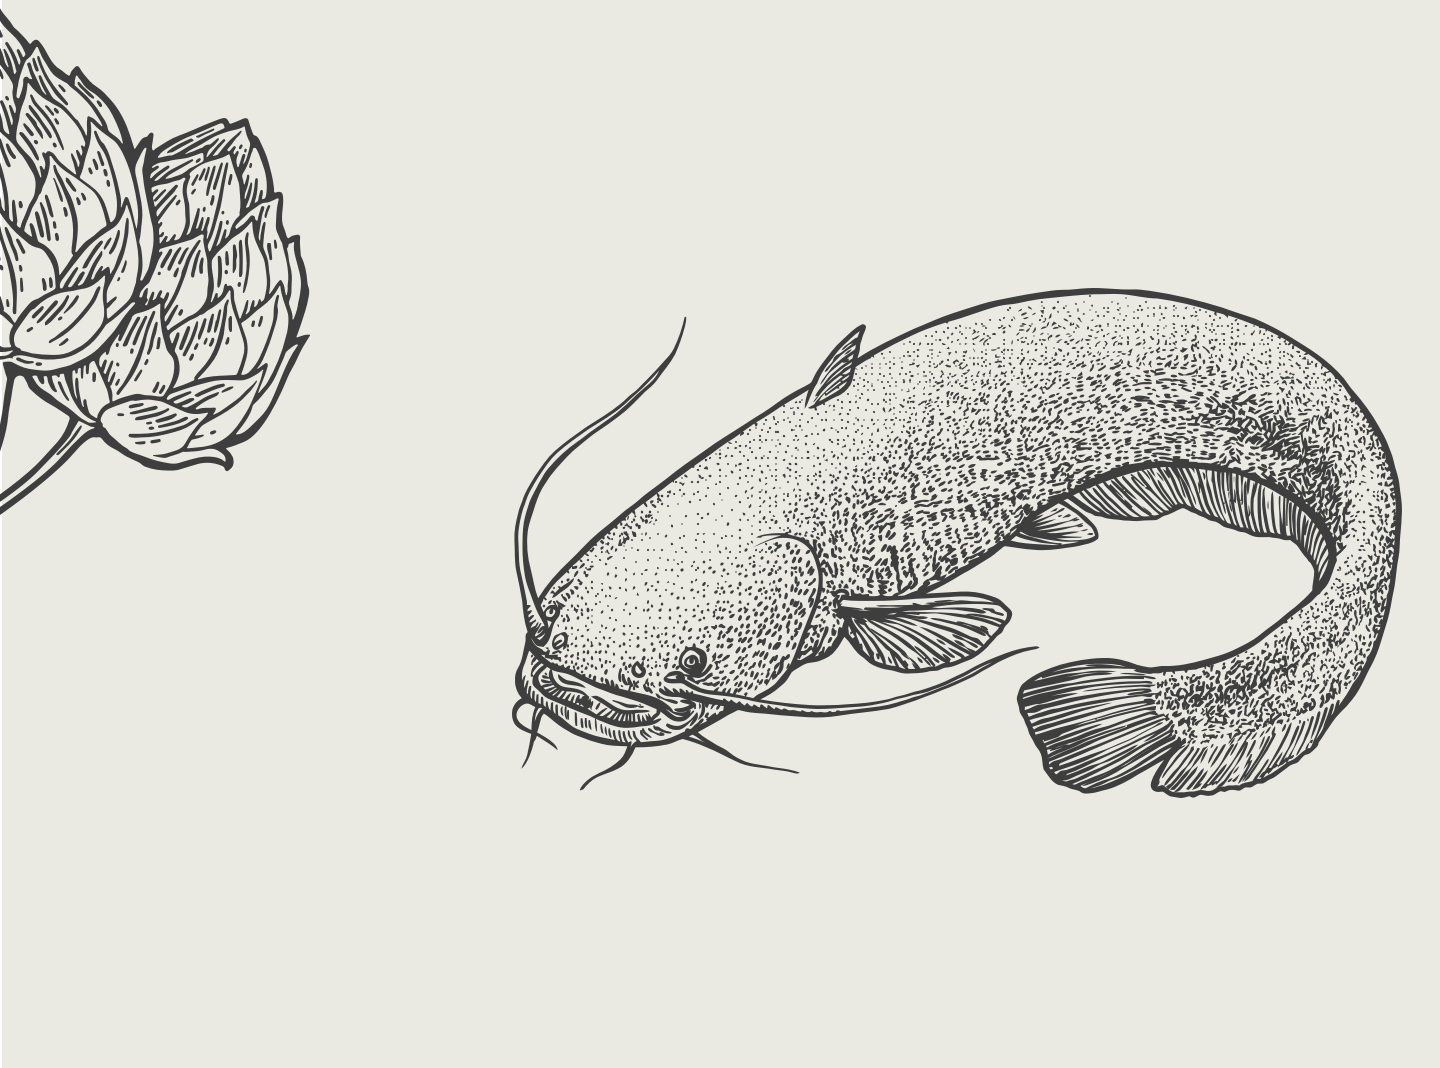 Restaurant branding hops and catfish illustrations